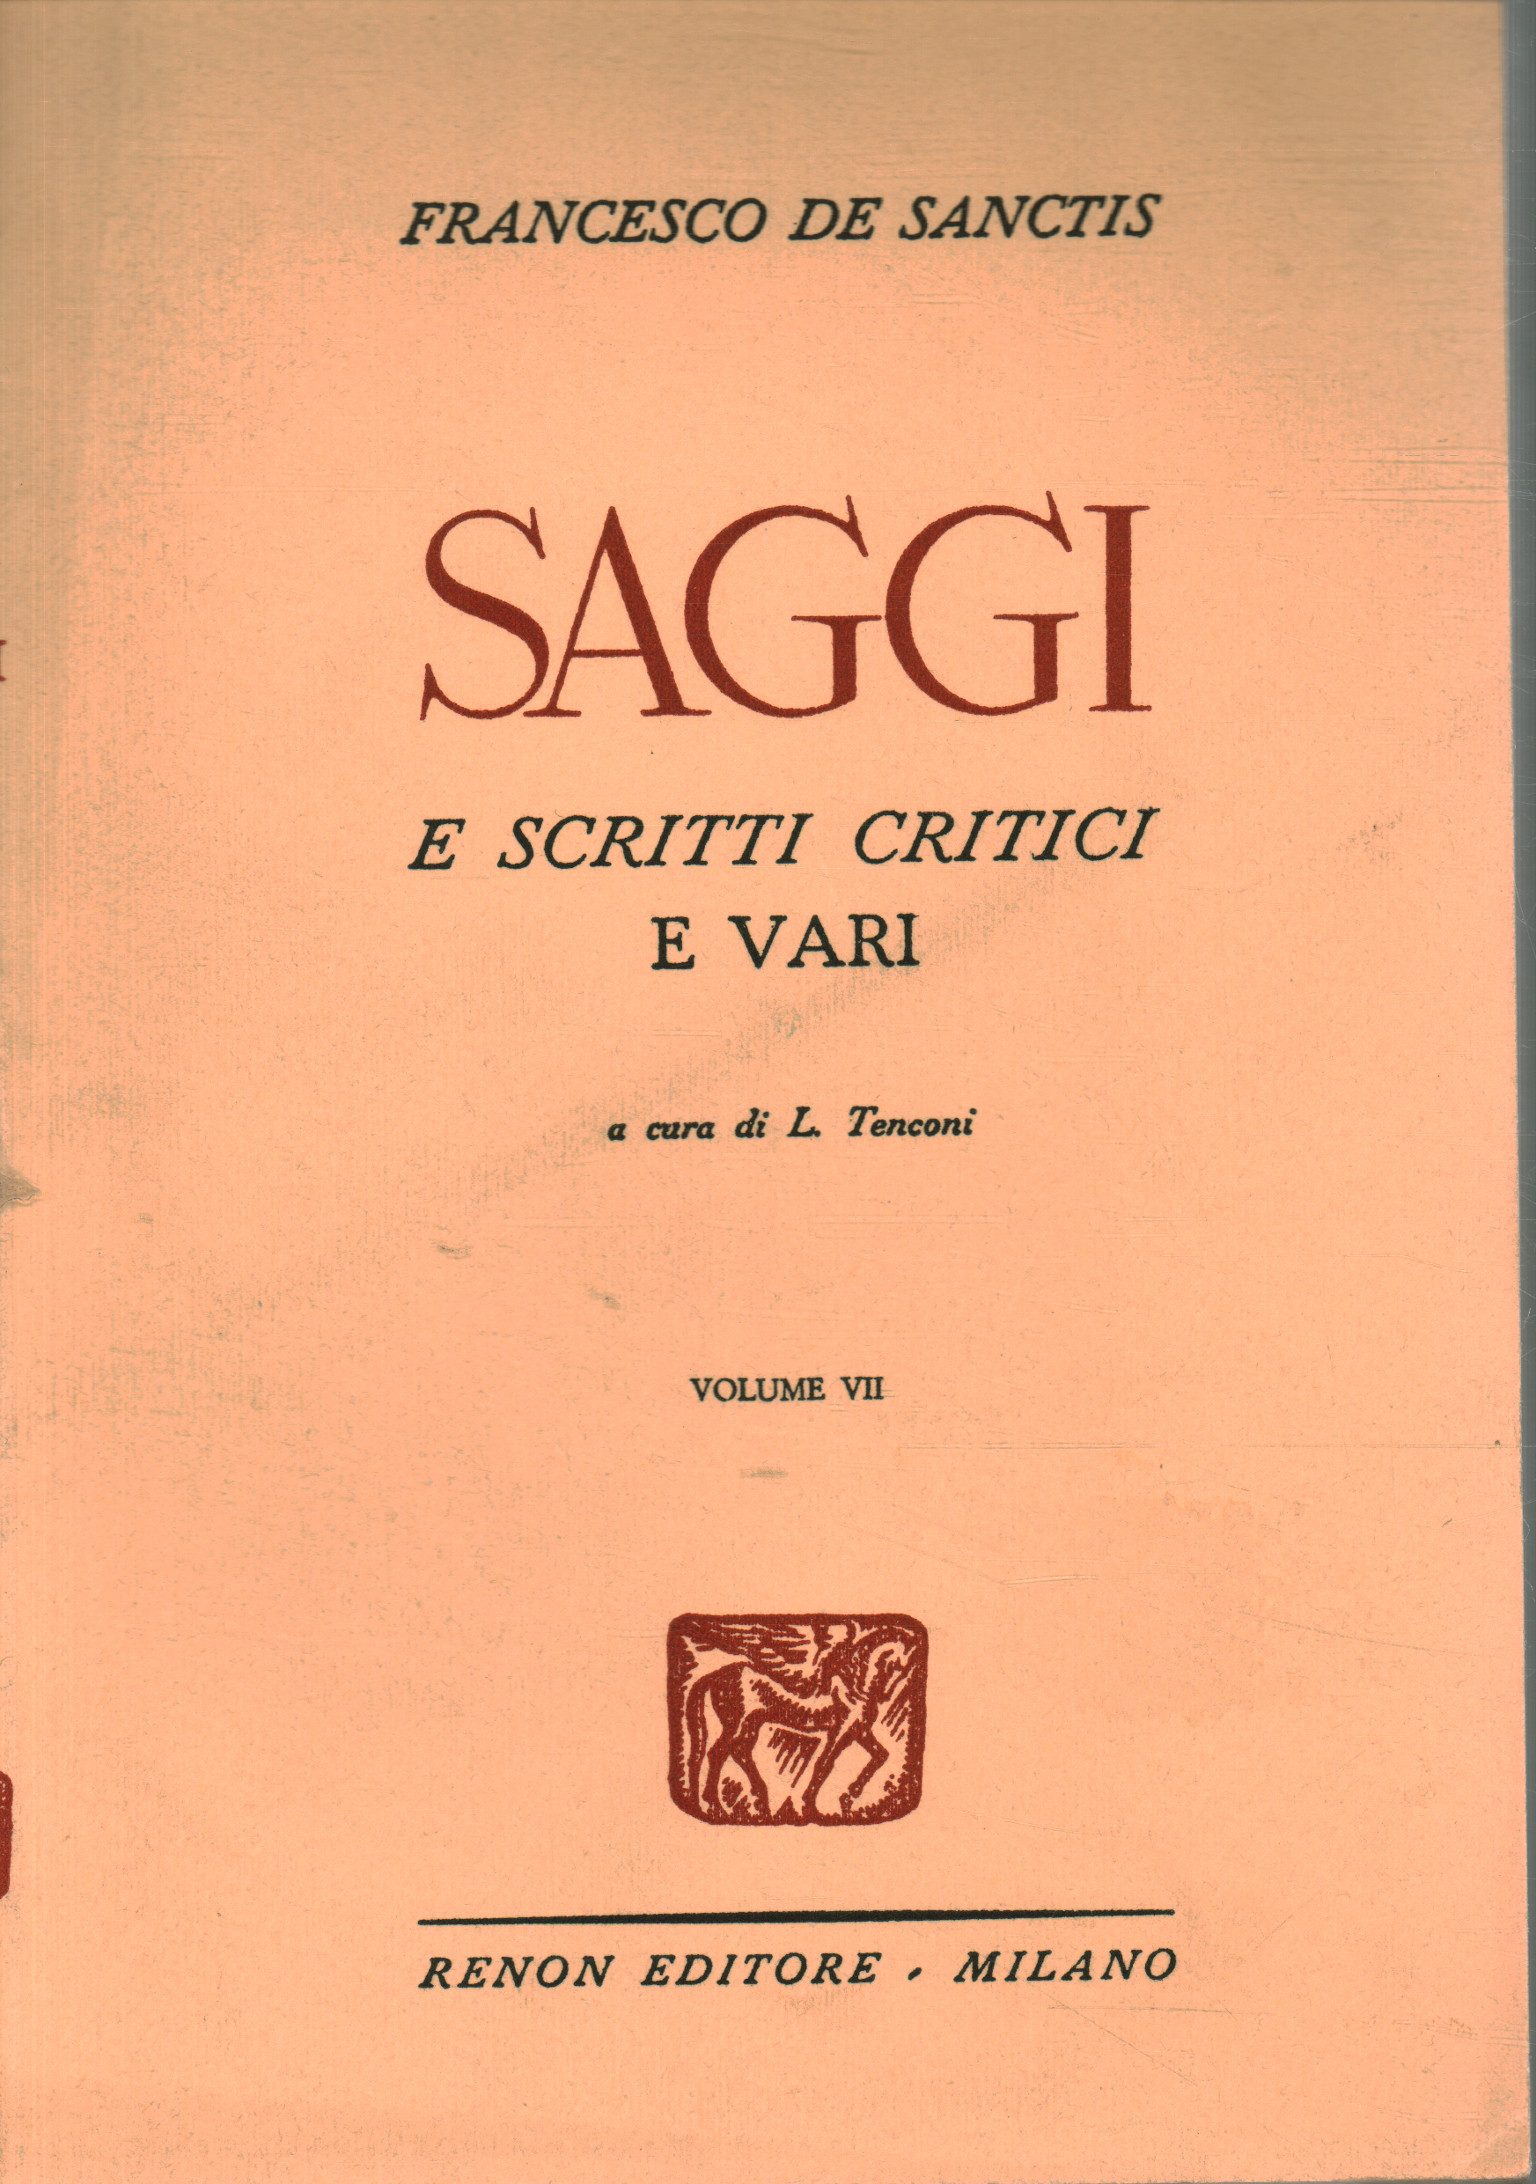 Saggi e scritti critici e vari. Volume settimo, Francesco De Sanctis